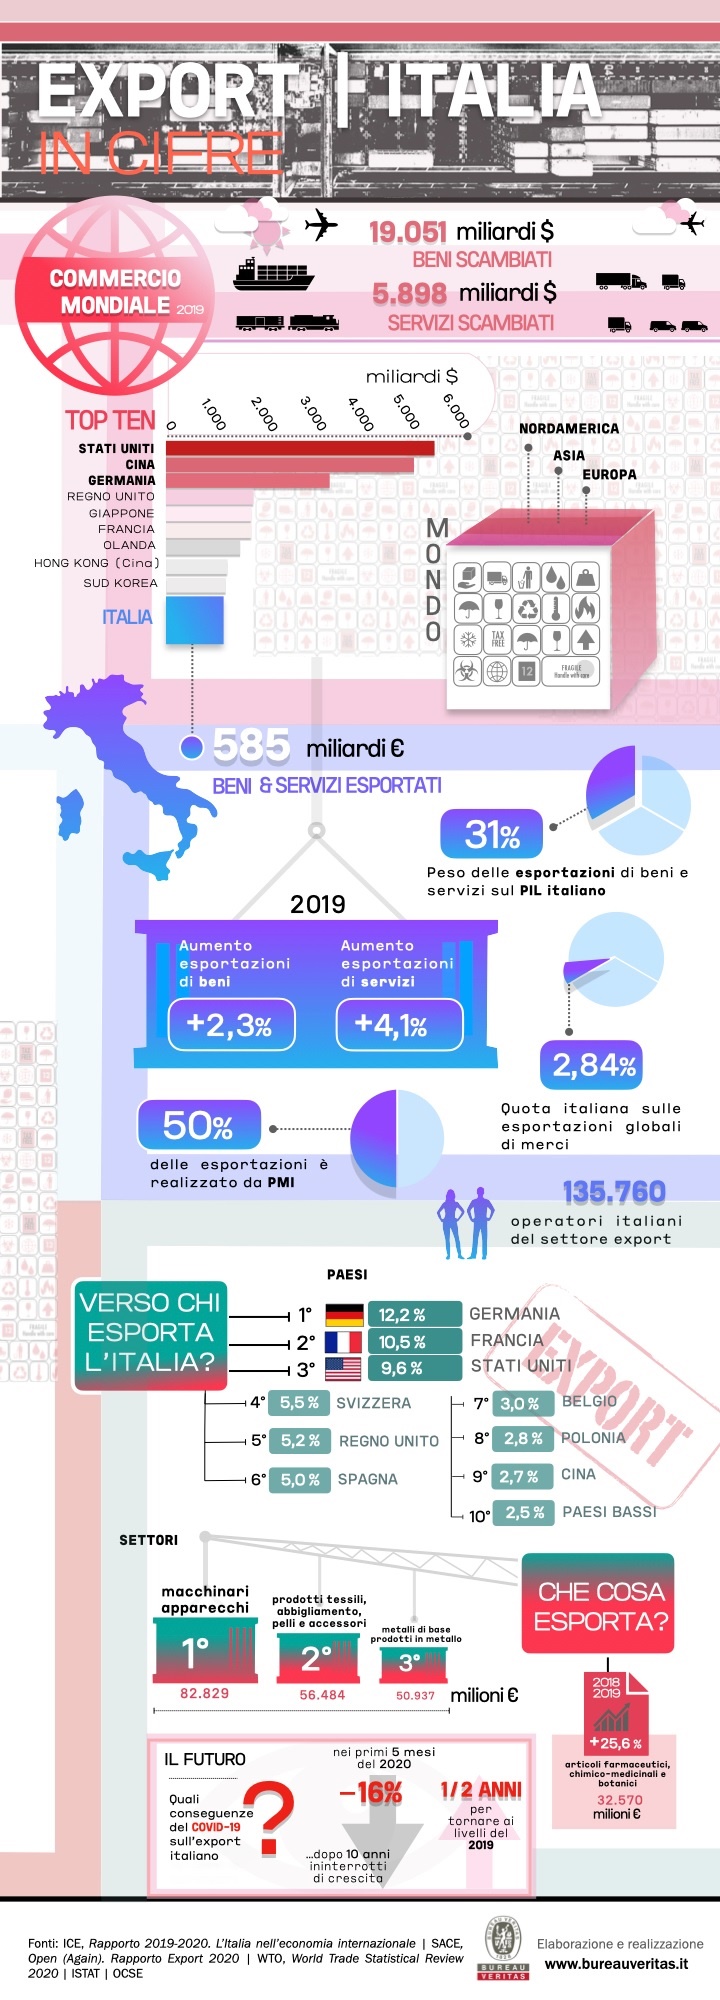 infografica emag export bureau veritas